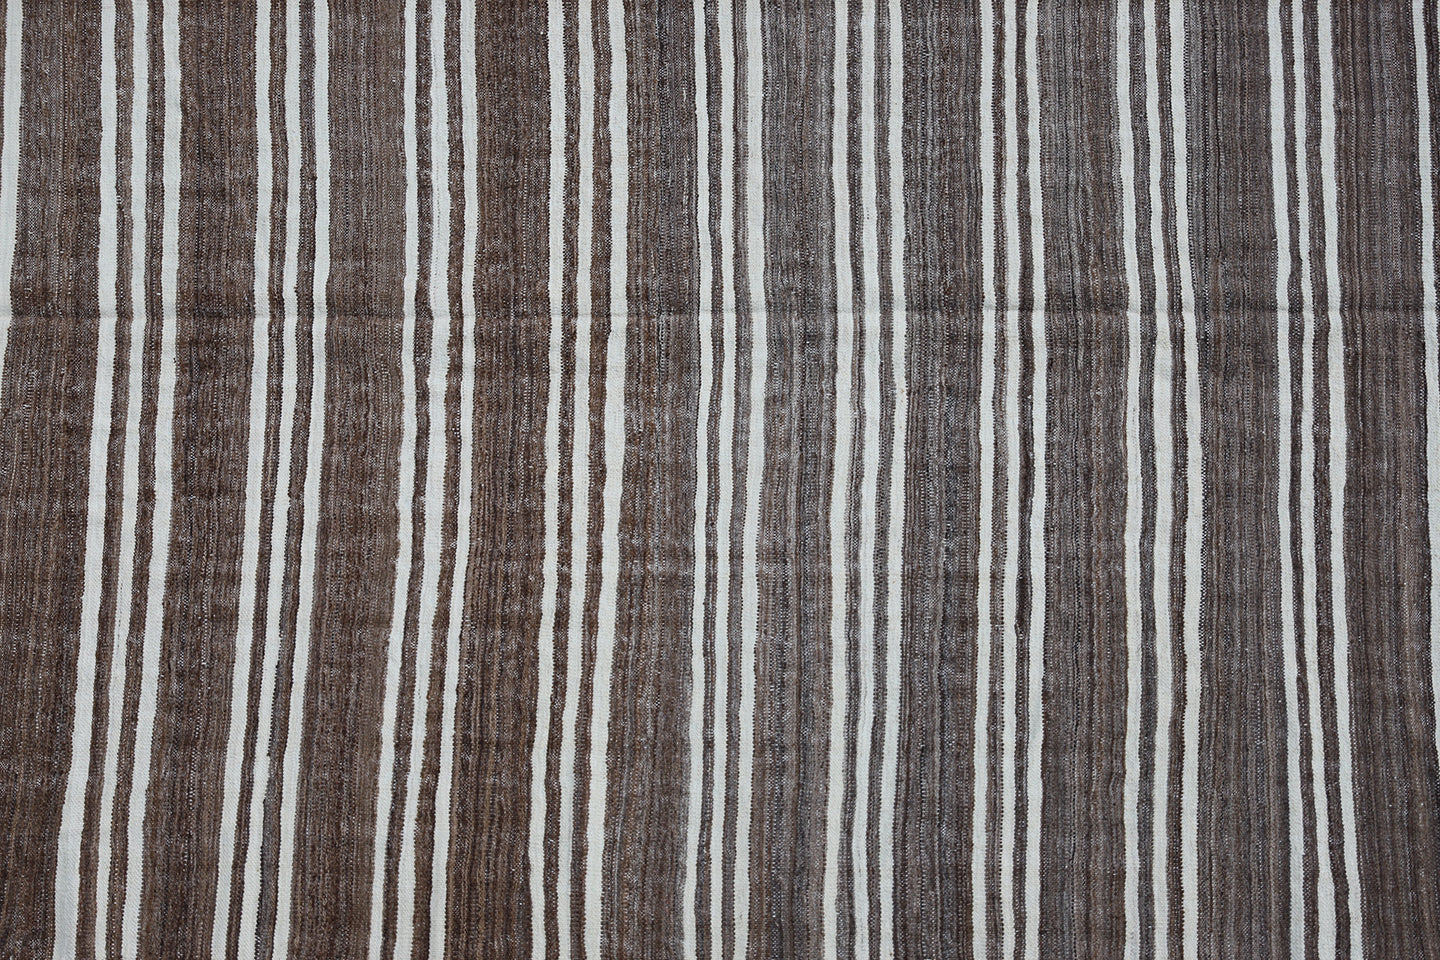 6'x9' Brown and Cream Stripe Ariana Kilim Rug